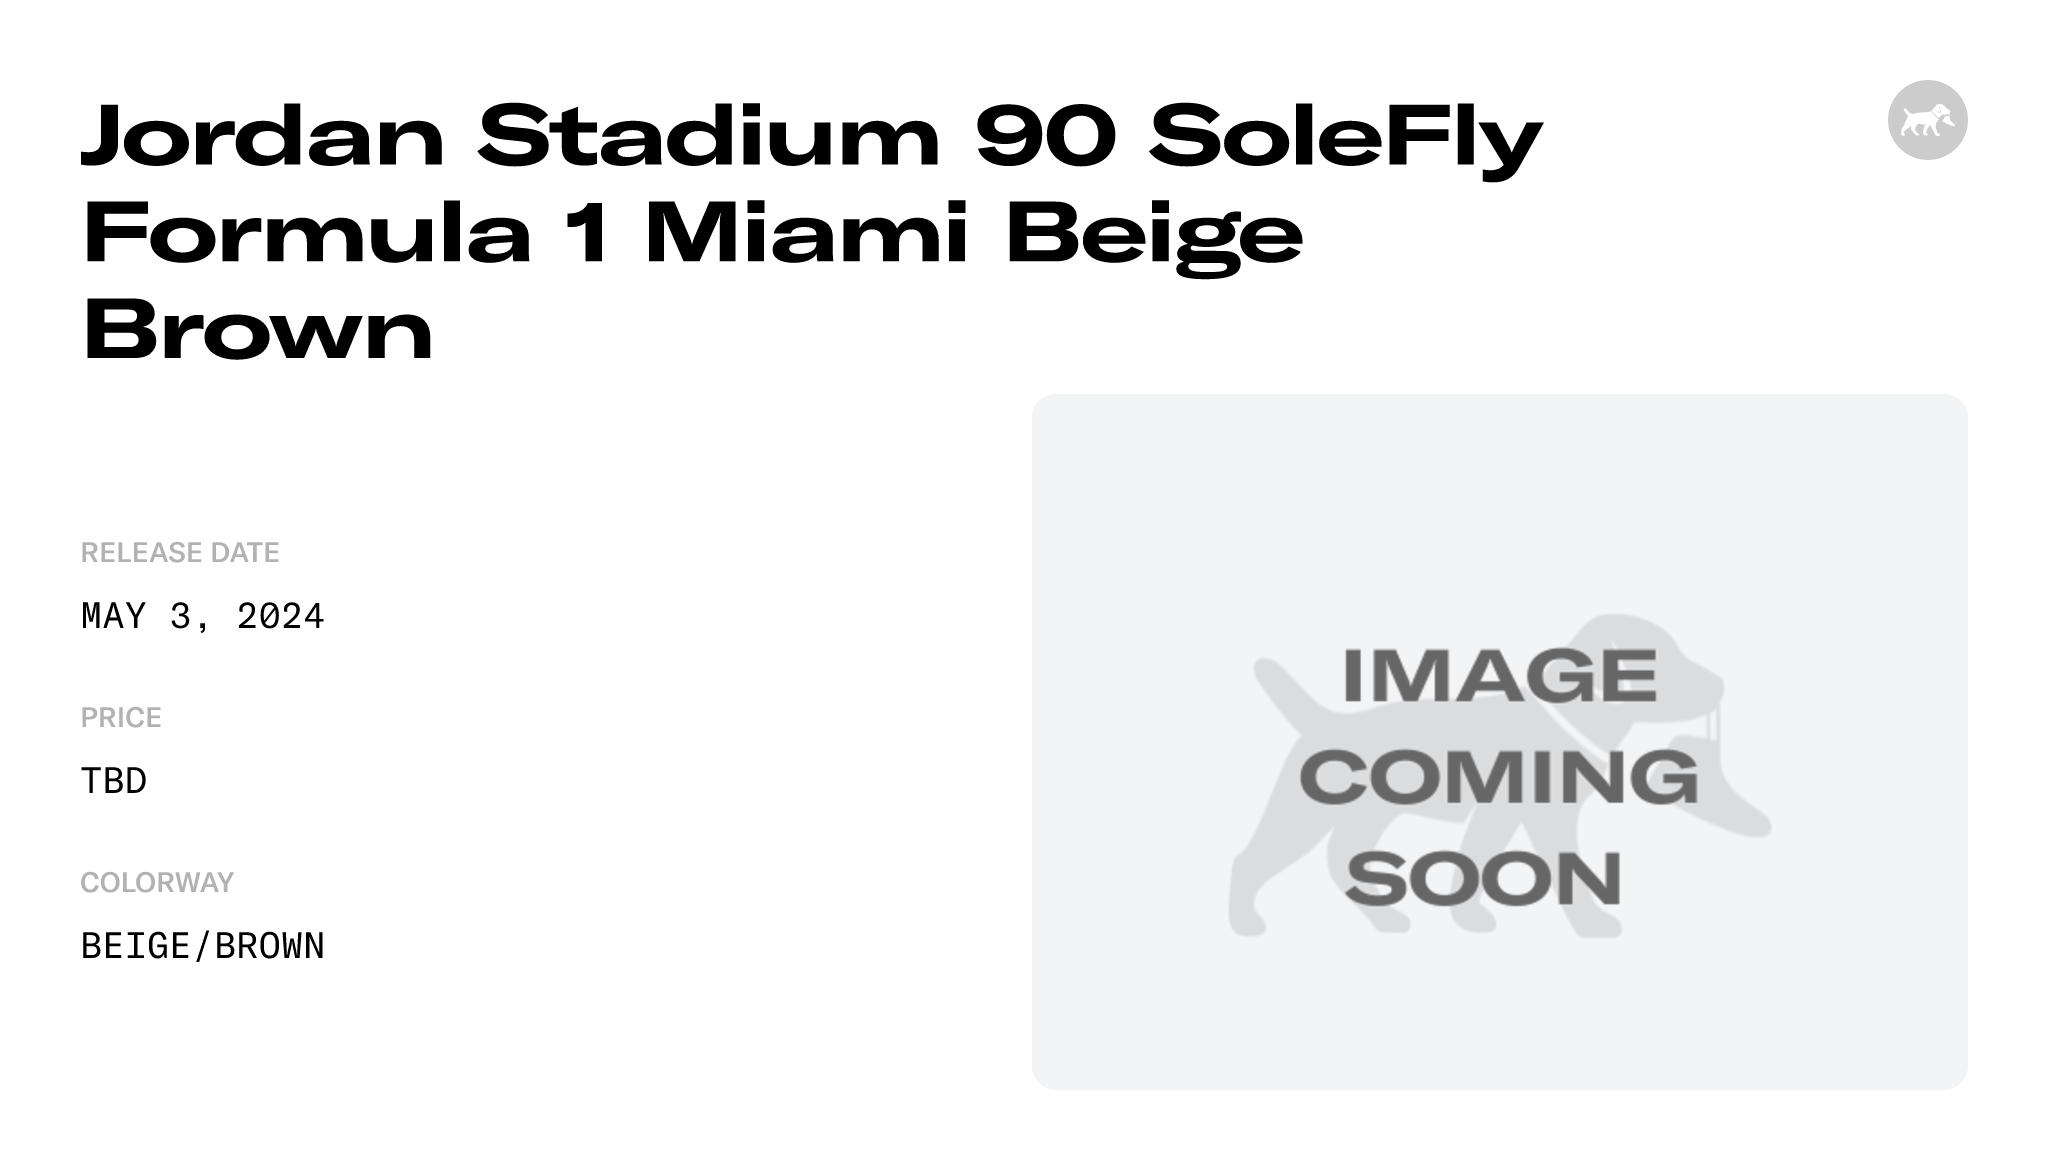 Jordan Stadium 90 SoleFly Formula 1 Miami Beige Brown Raffles and ...